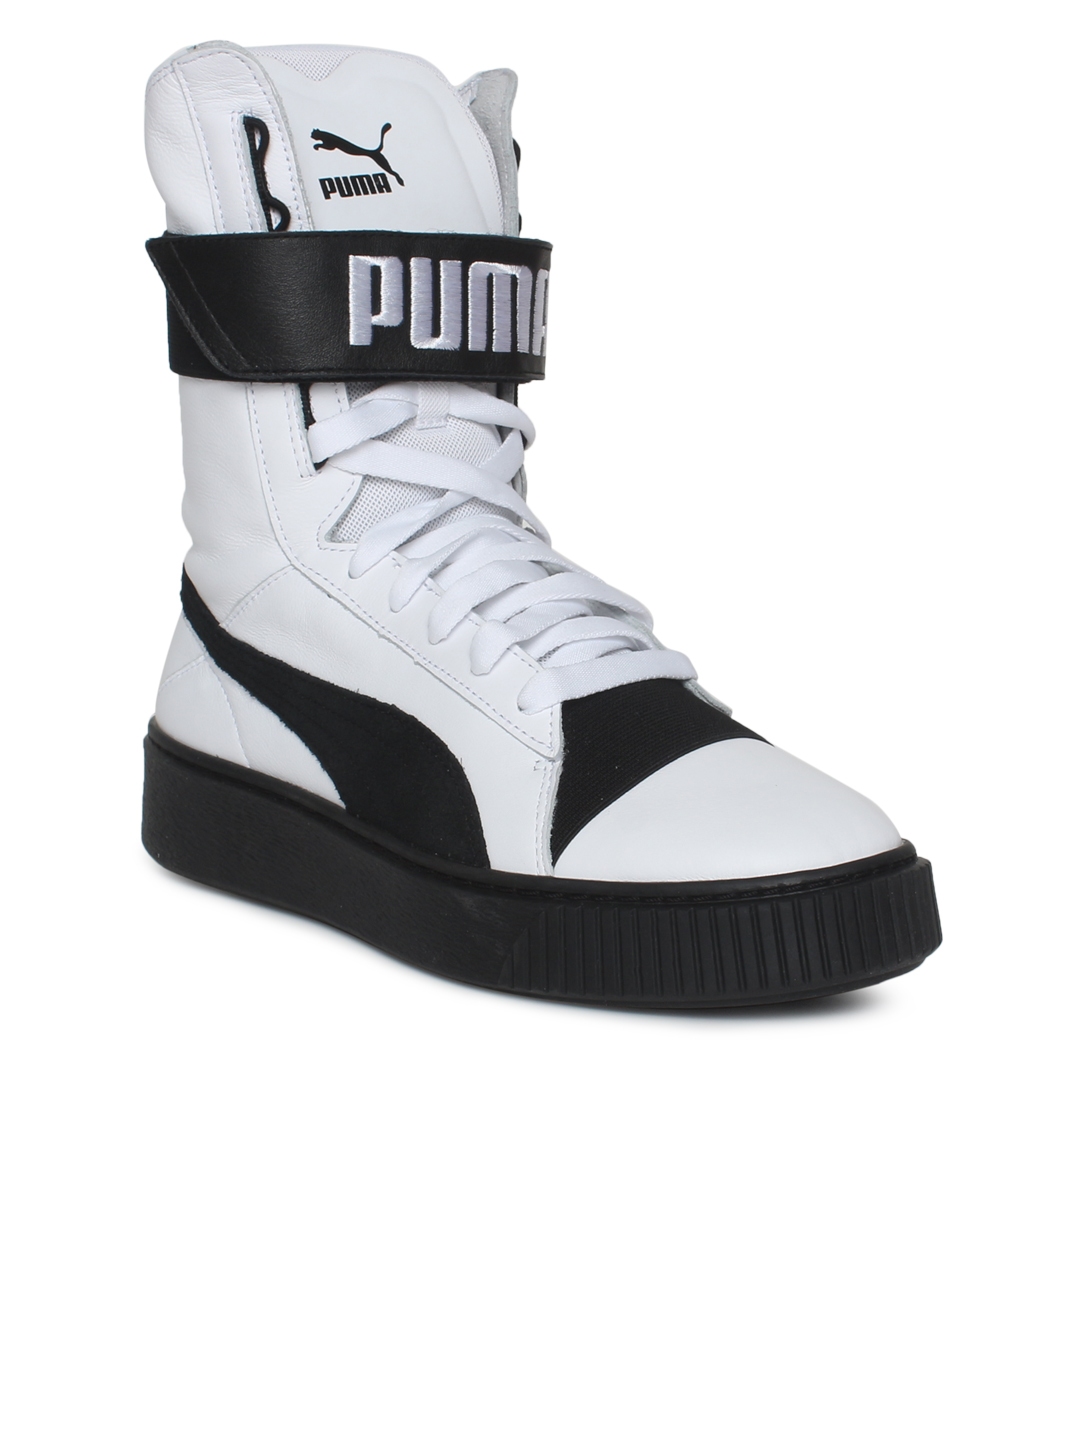 puma high platform sneakers